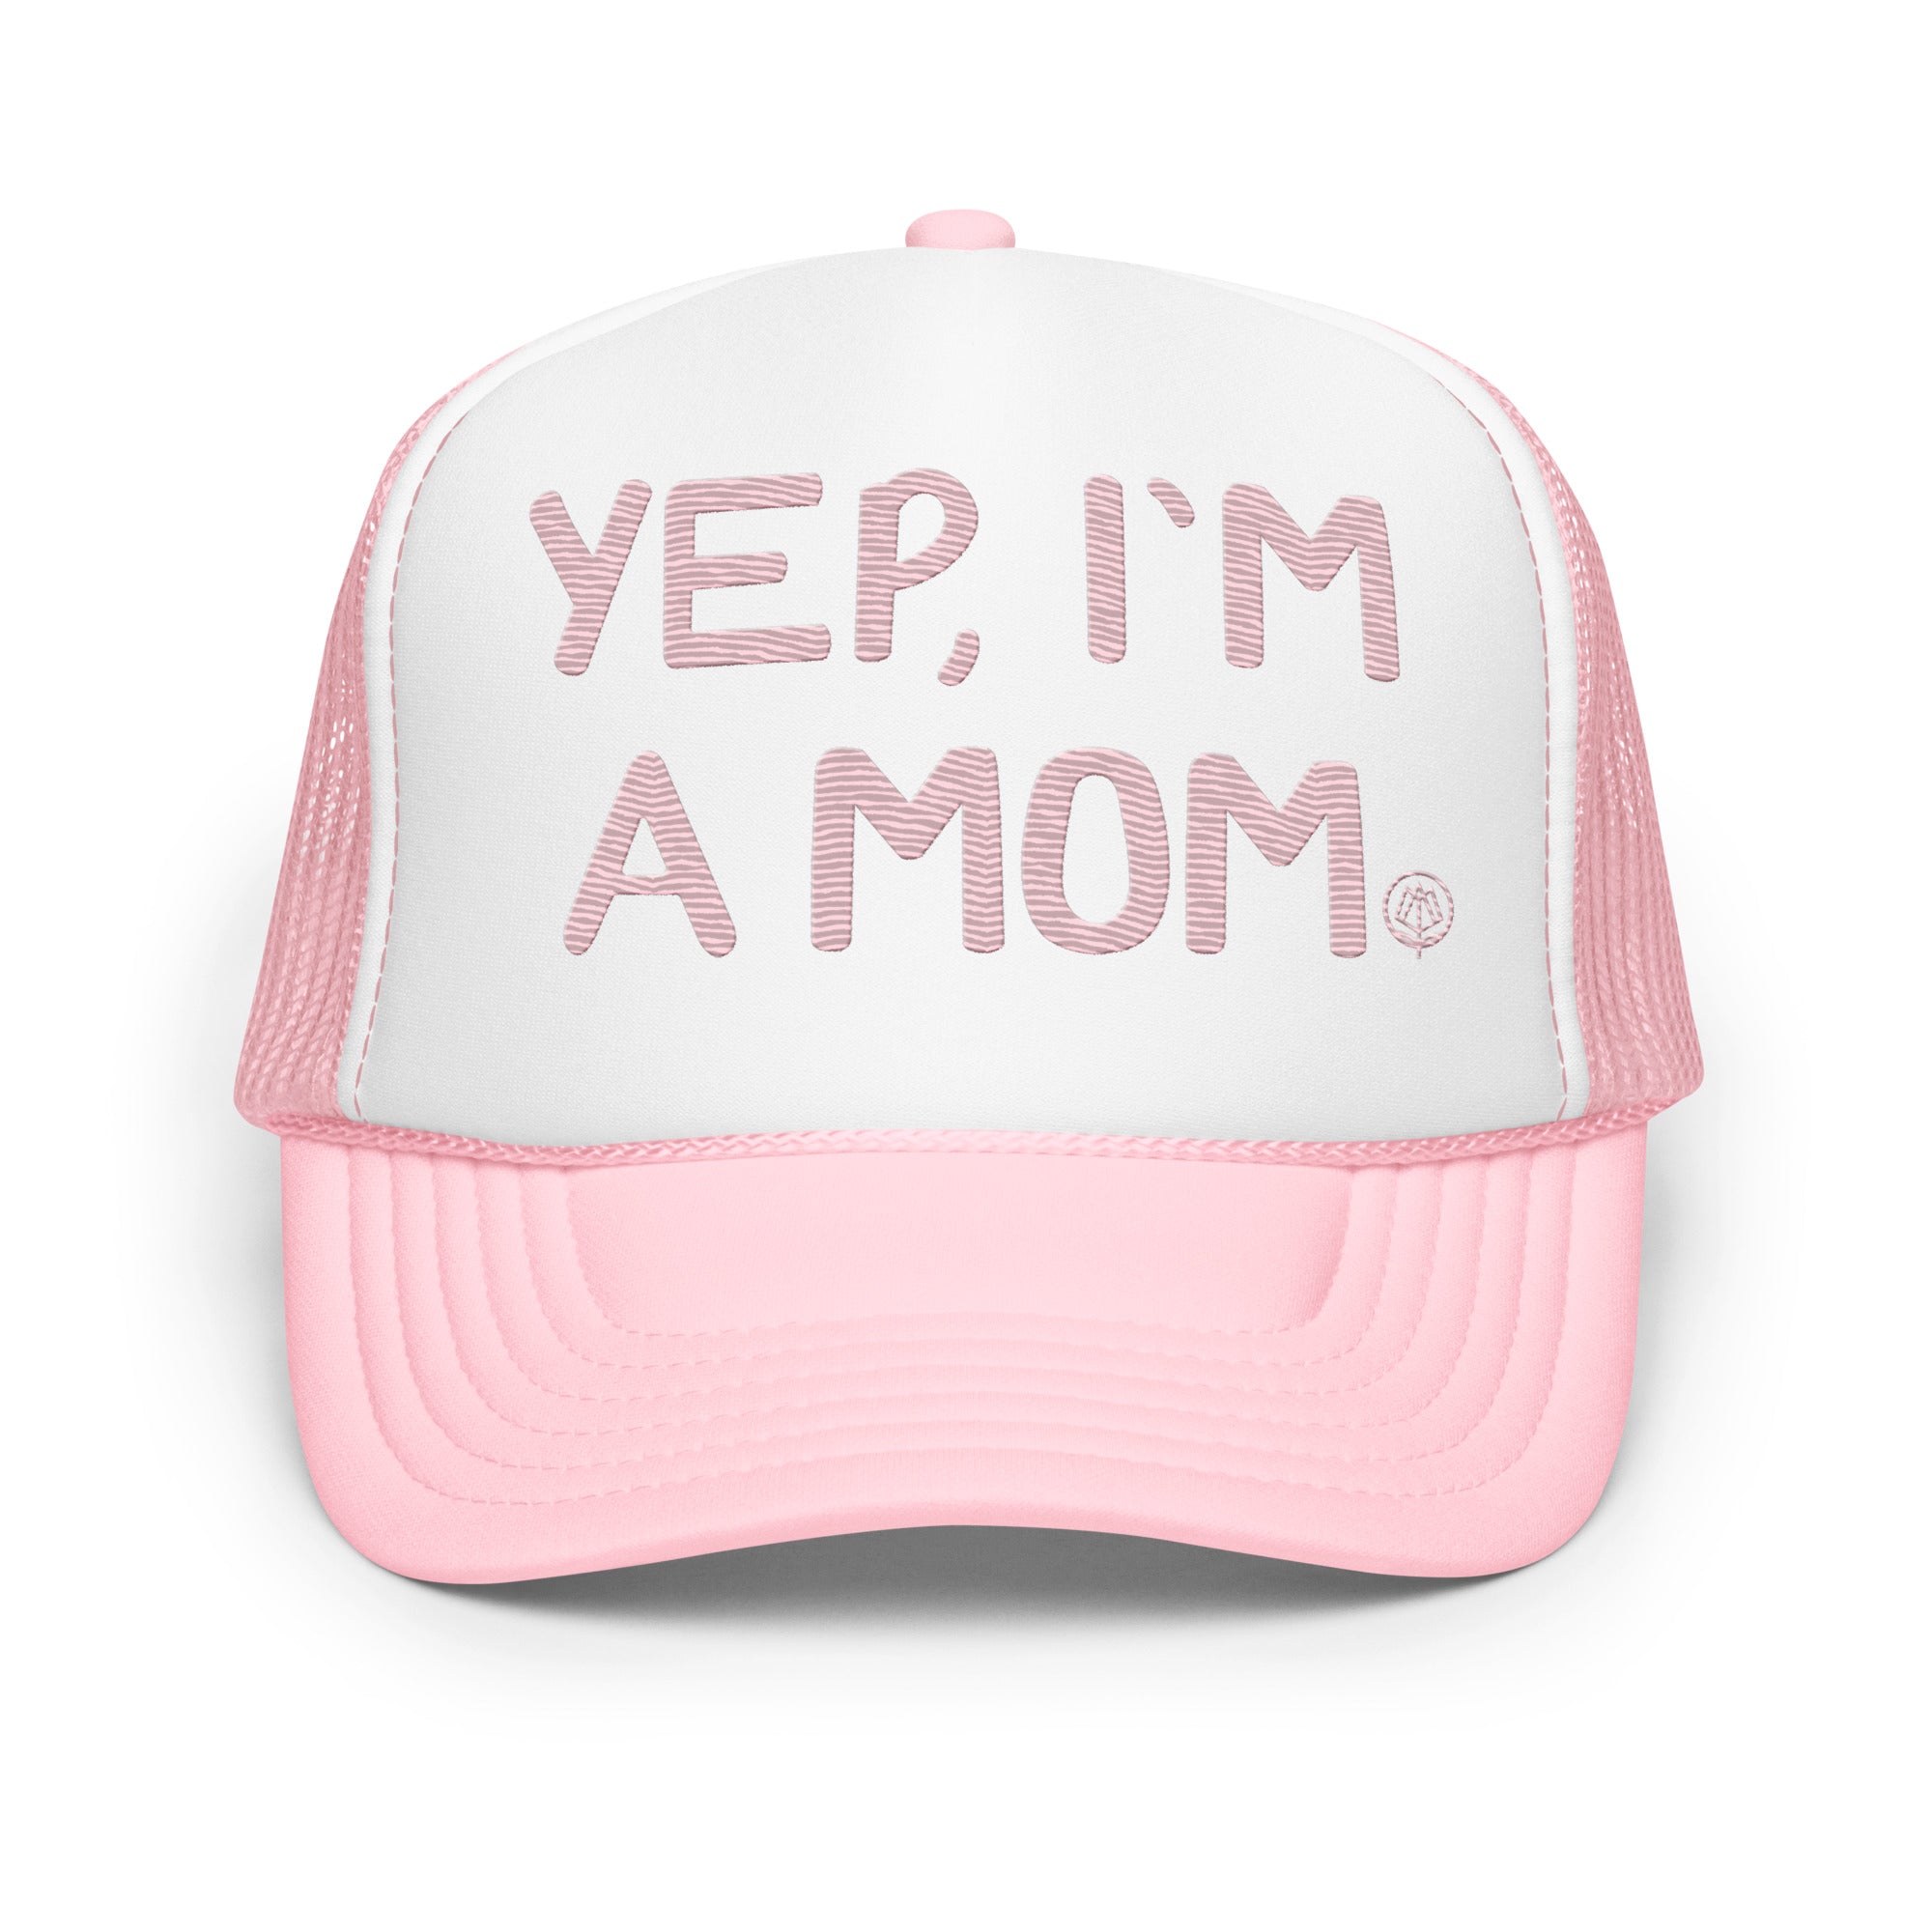 Yep, I'm A Mom Hat - Pink